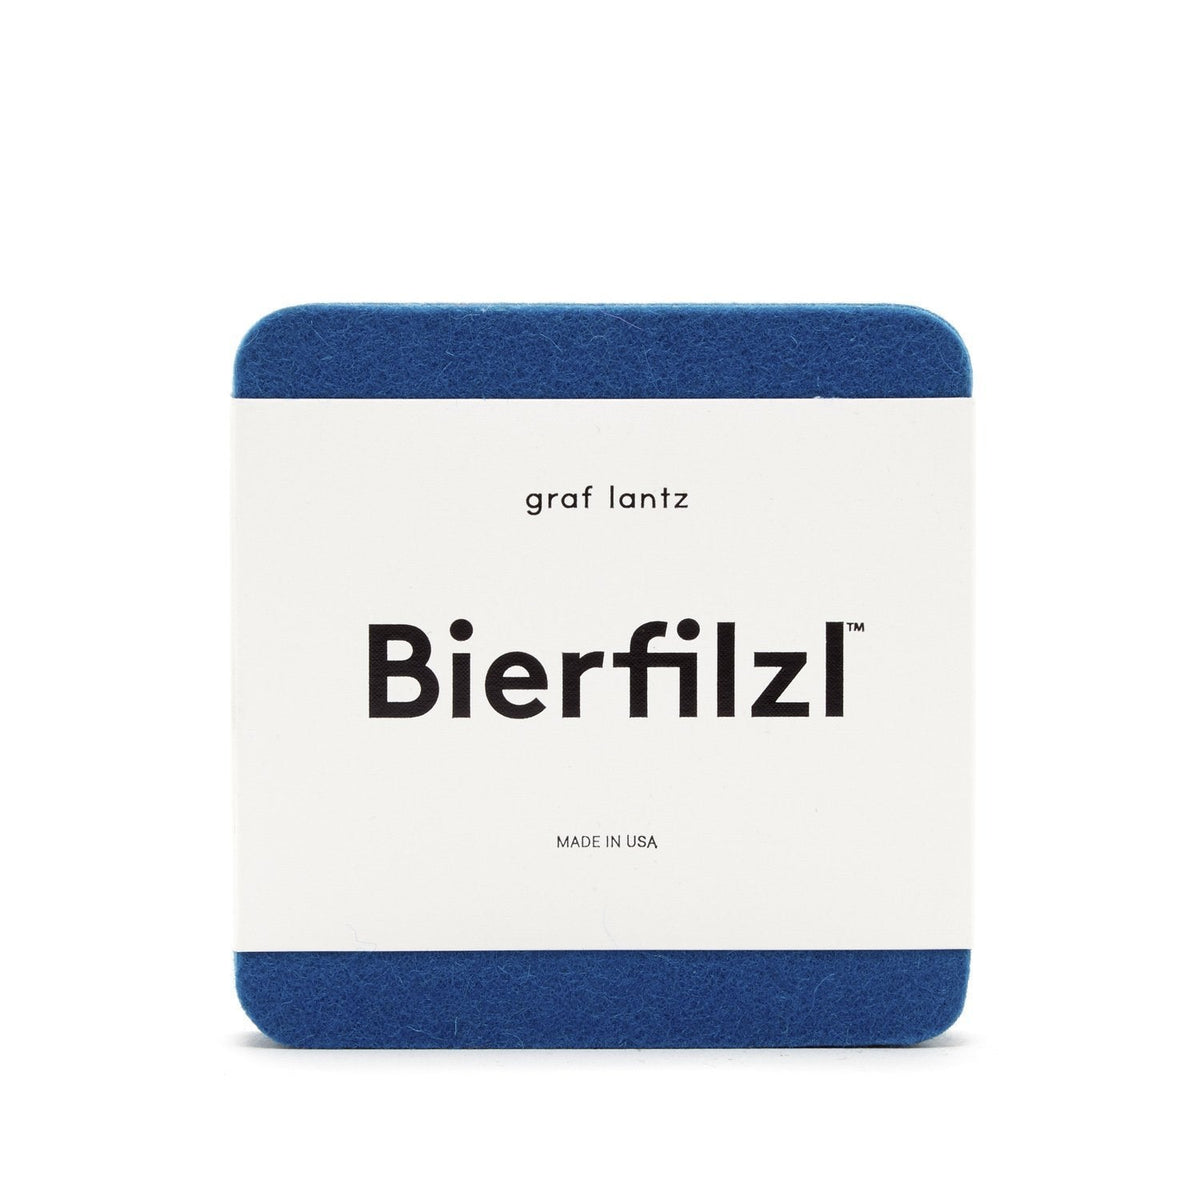 Bierfilzl Square Coaster Felt Solid 4 Pack - Cobalt